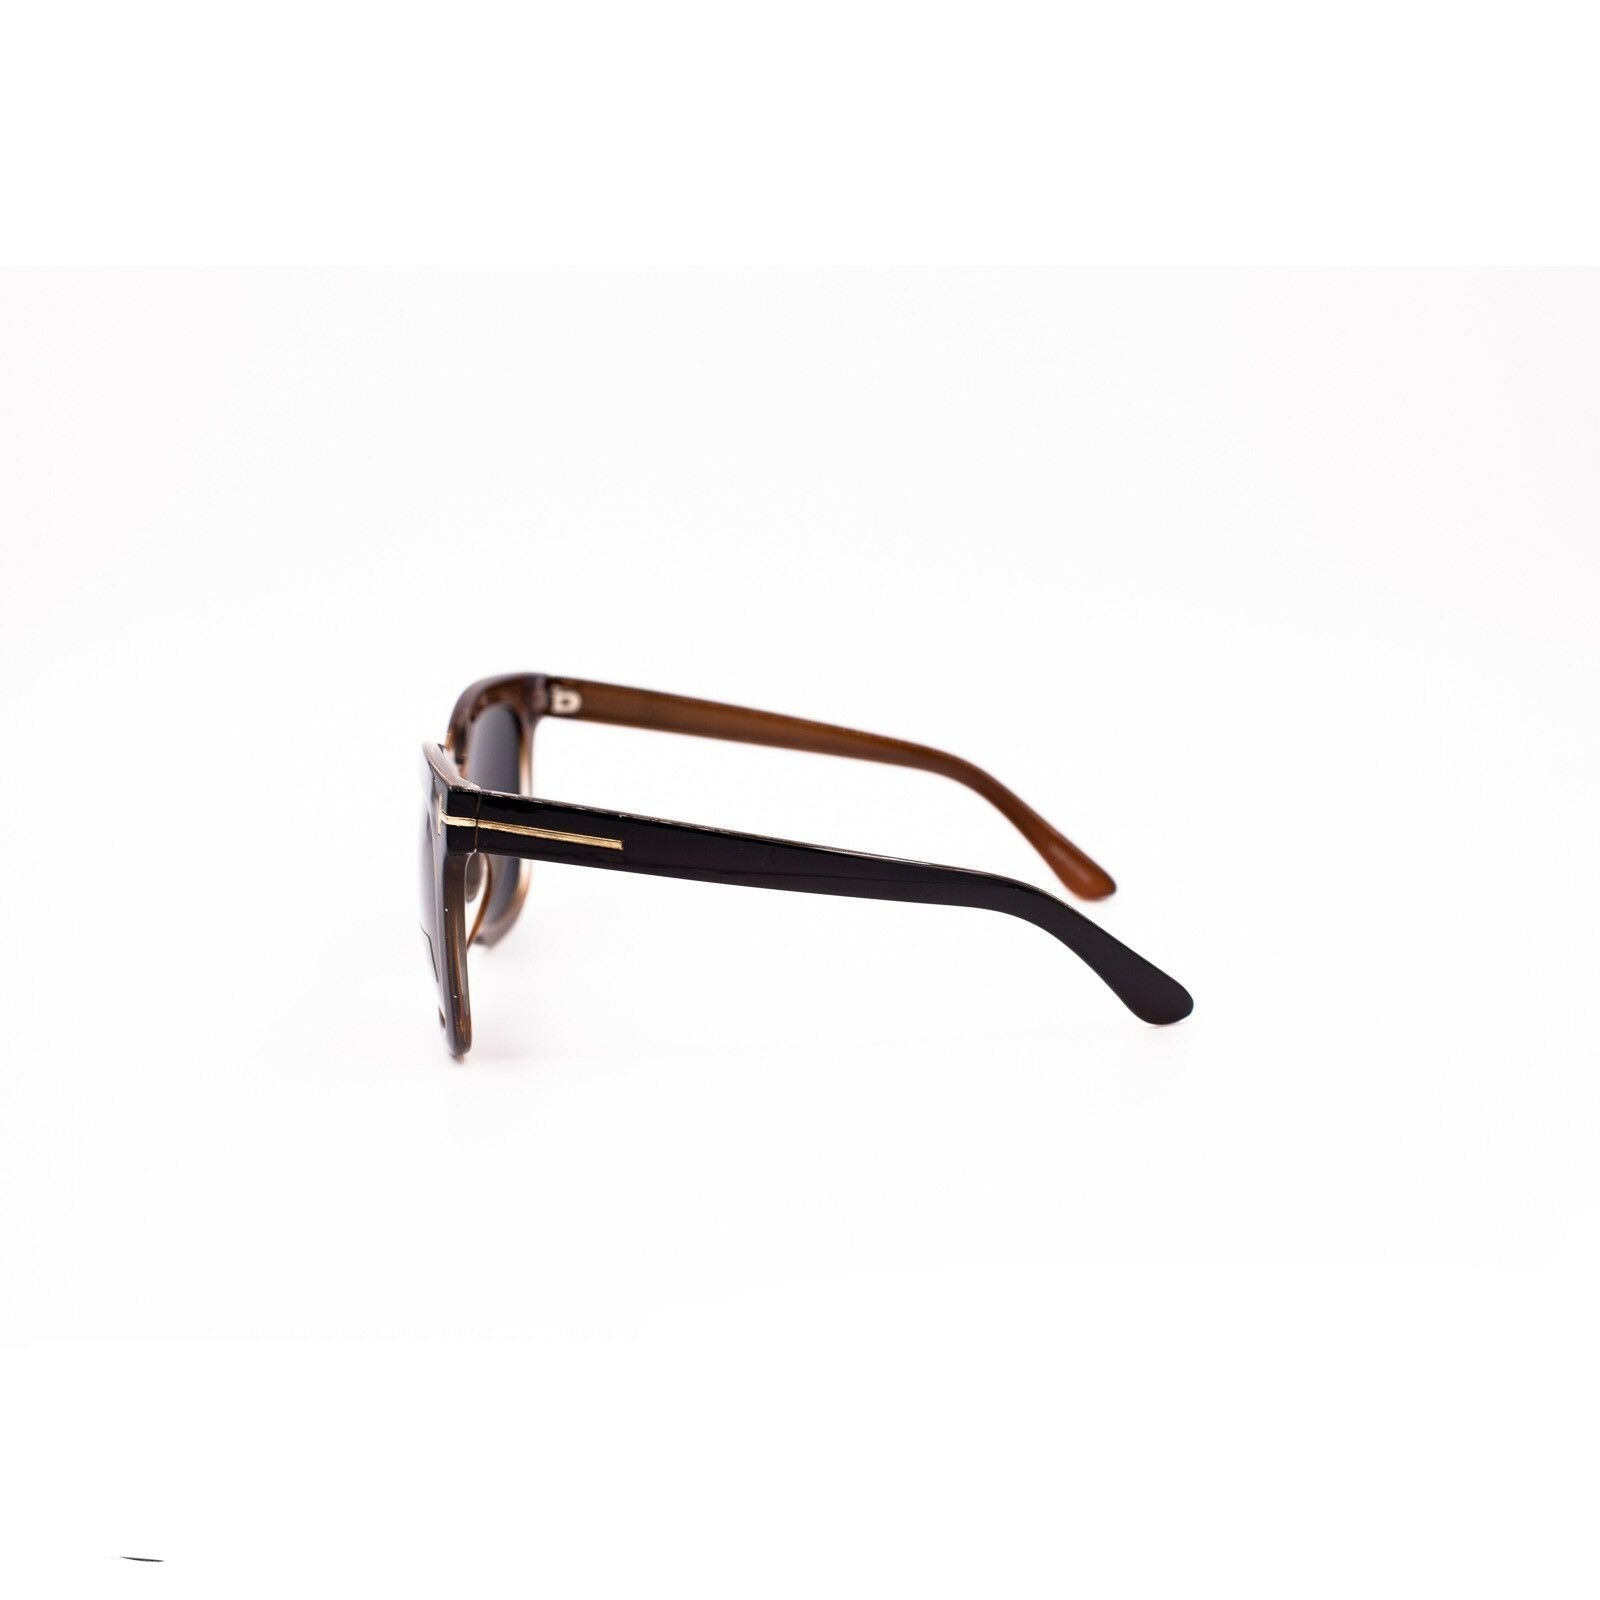 Sunglasses Men UV400 Driving Stylish Sports Fashion Eyewear With Hardcase - Pantsnsox